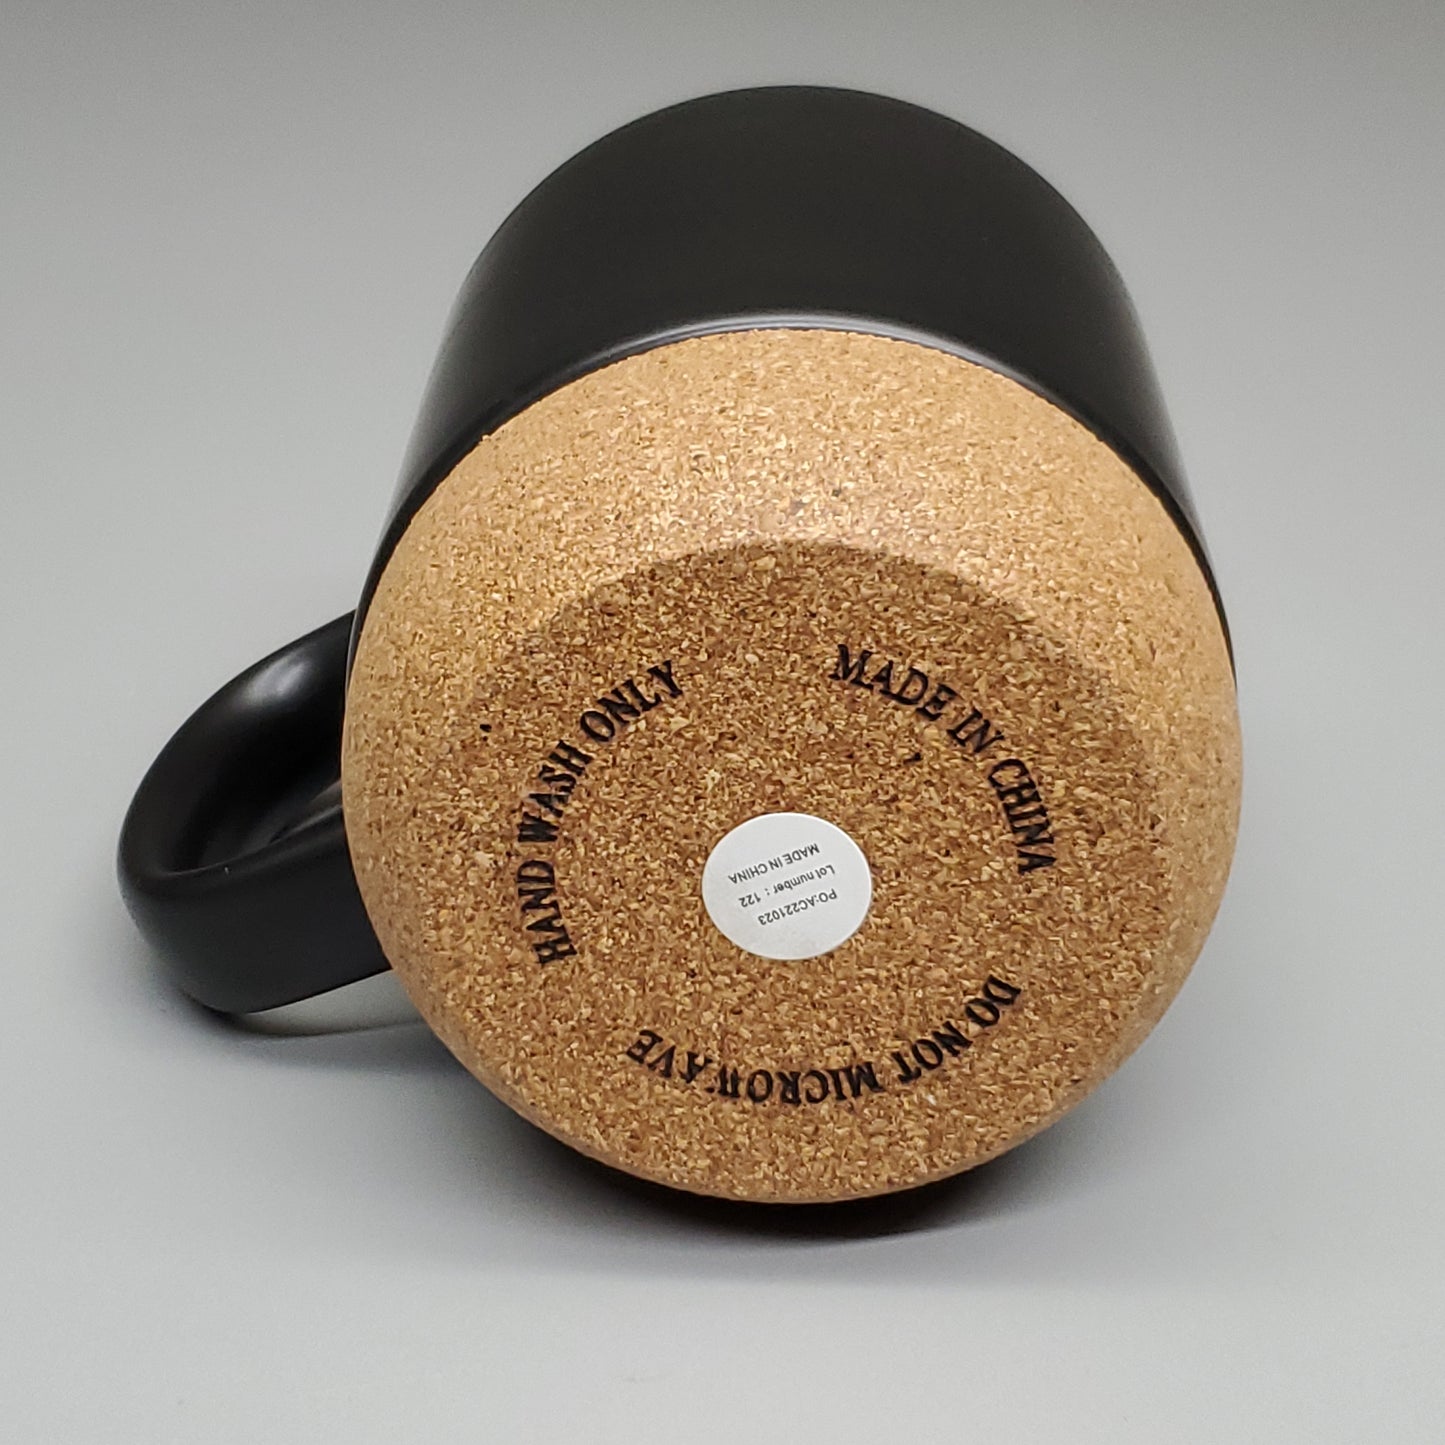 12 Pack of Cork Base Ceramic Mugs with Lids Blank Black AC566-00